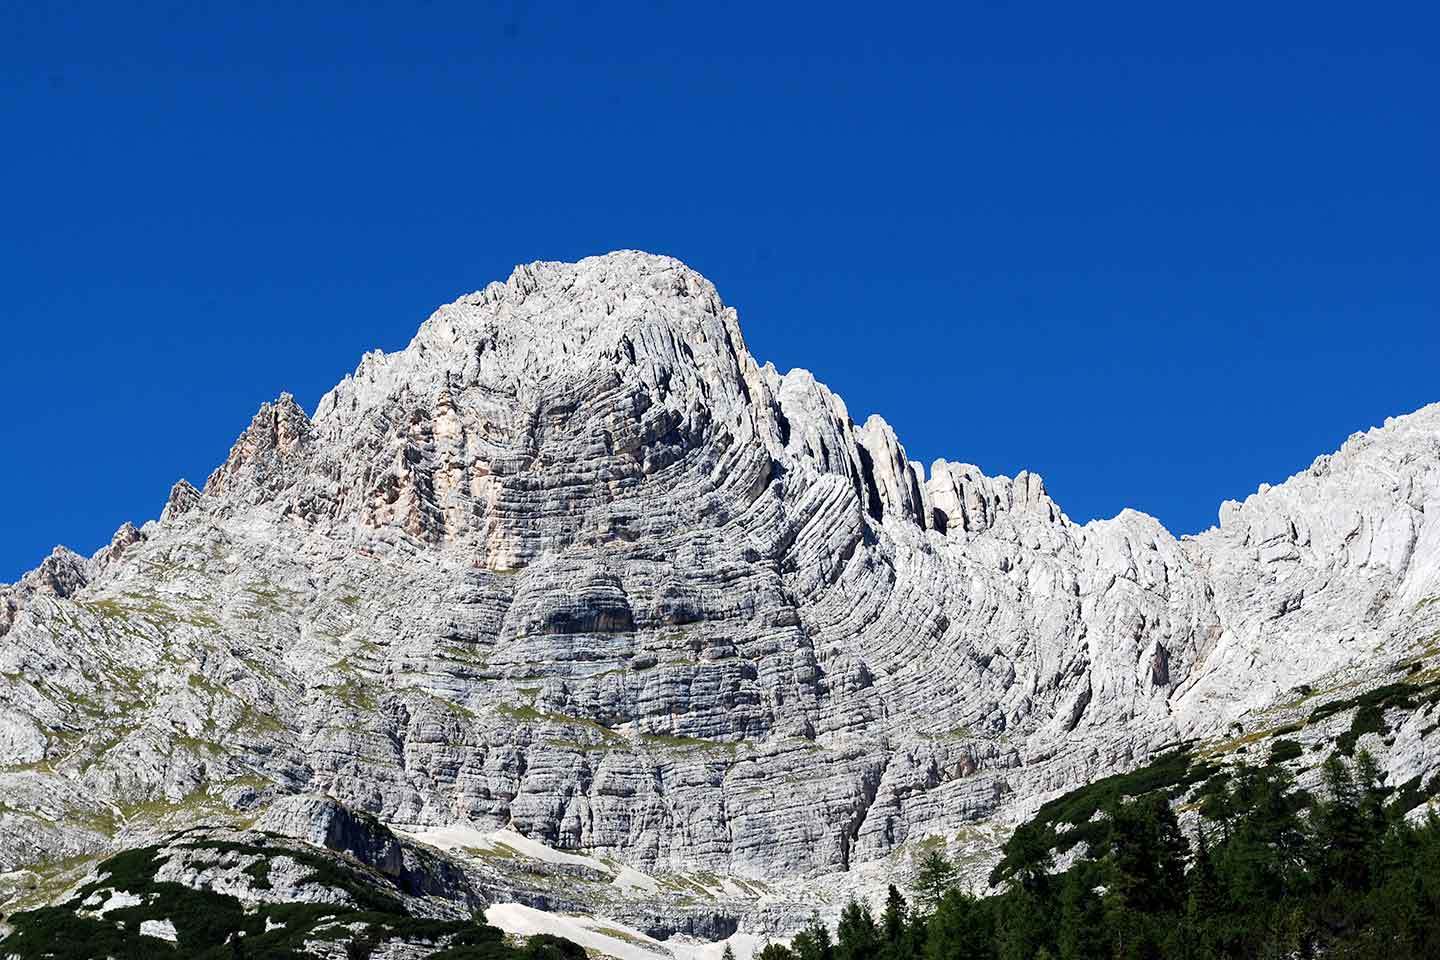 Dolomite High Route no. 4 - Sorapiss